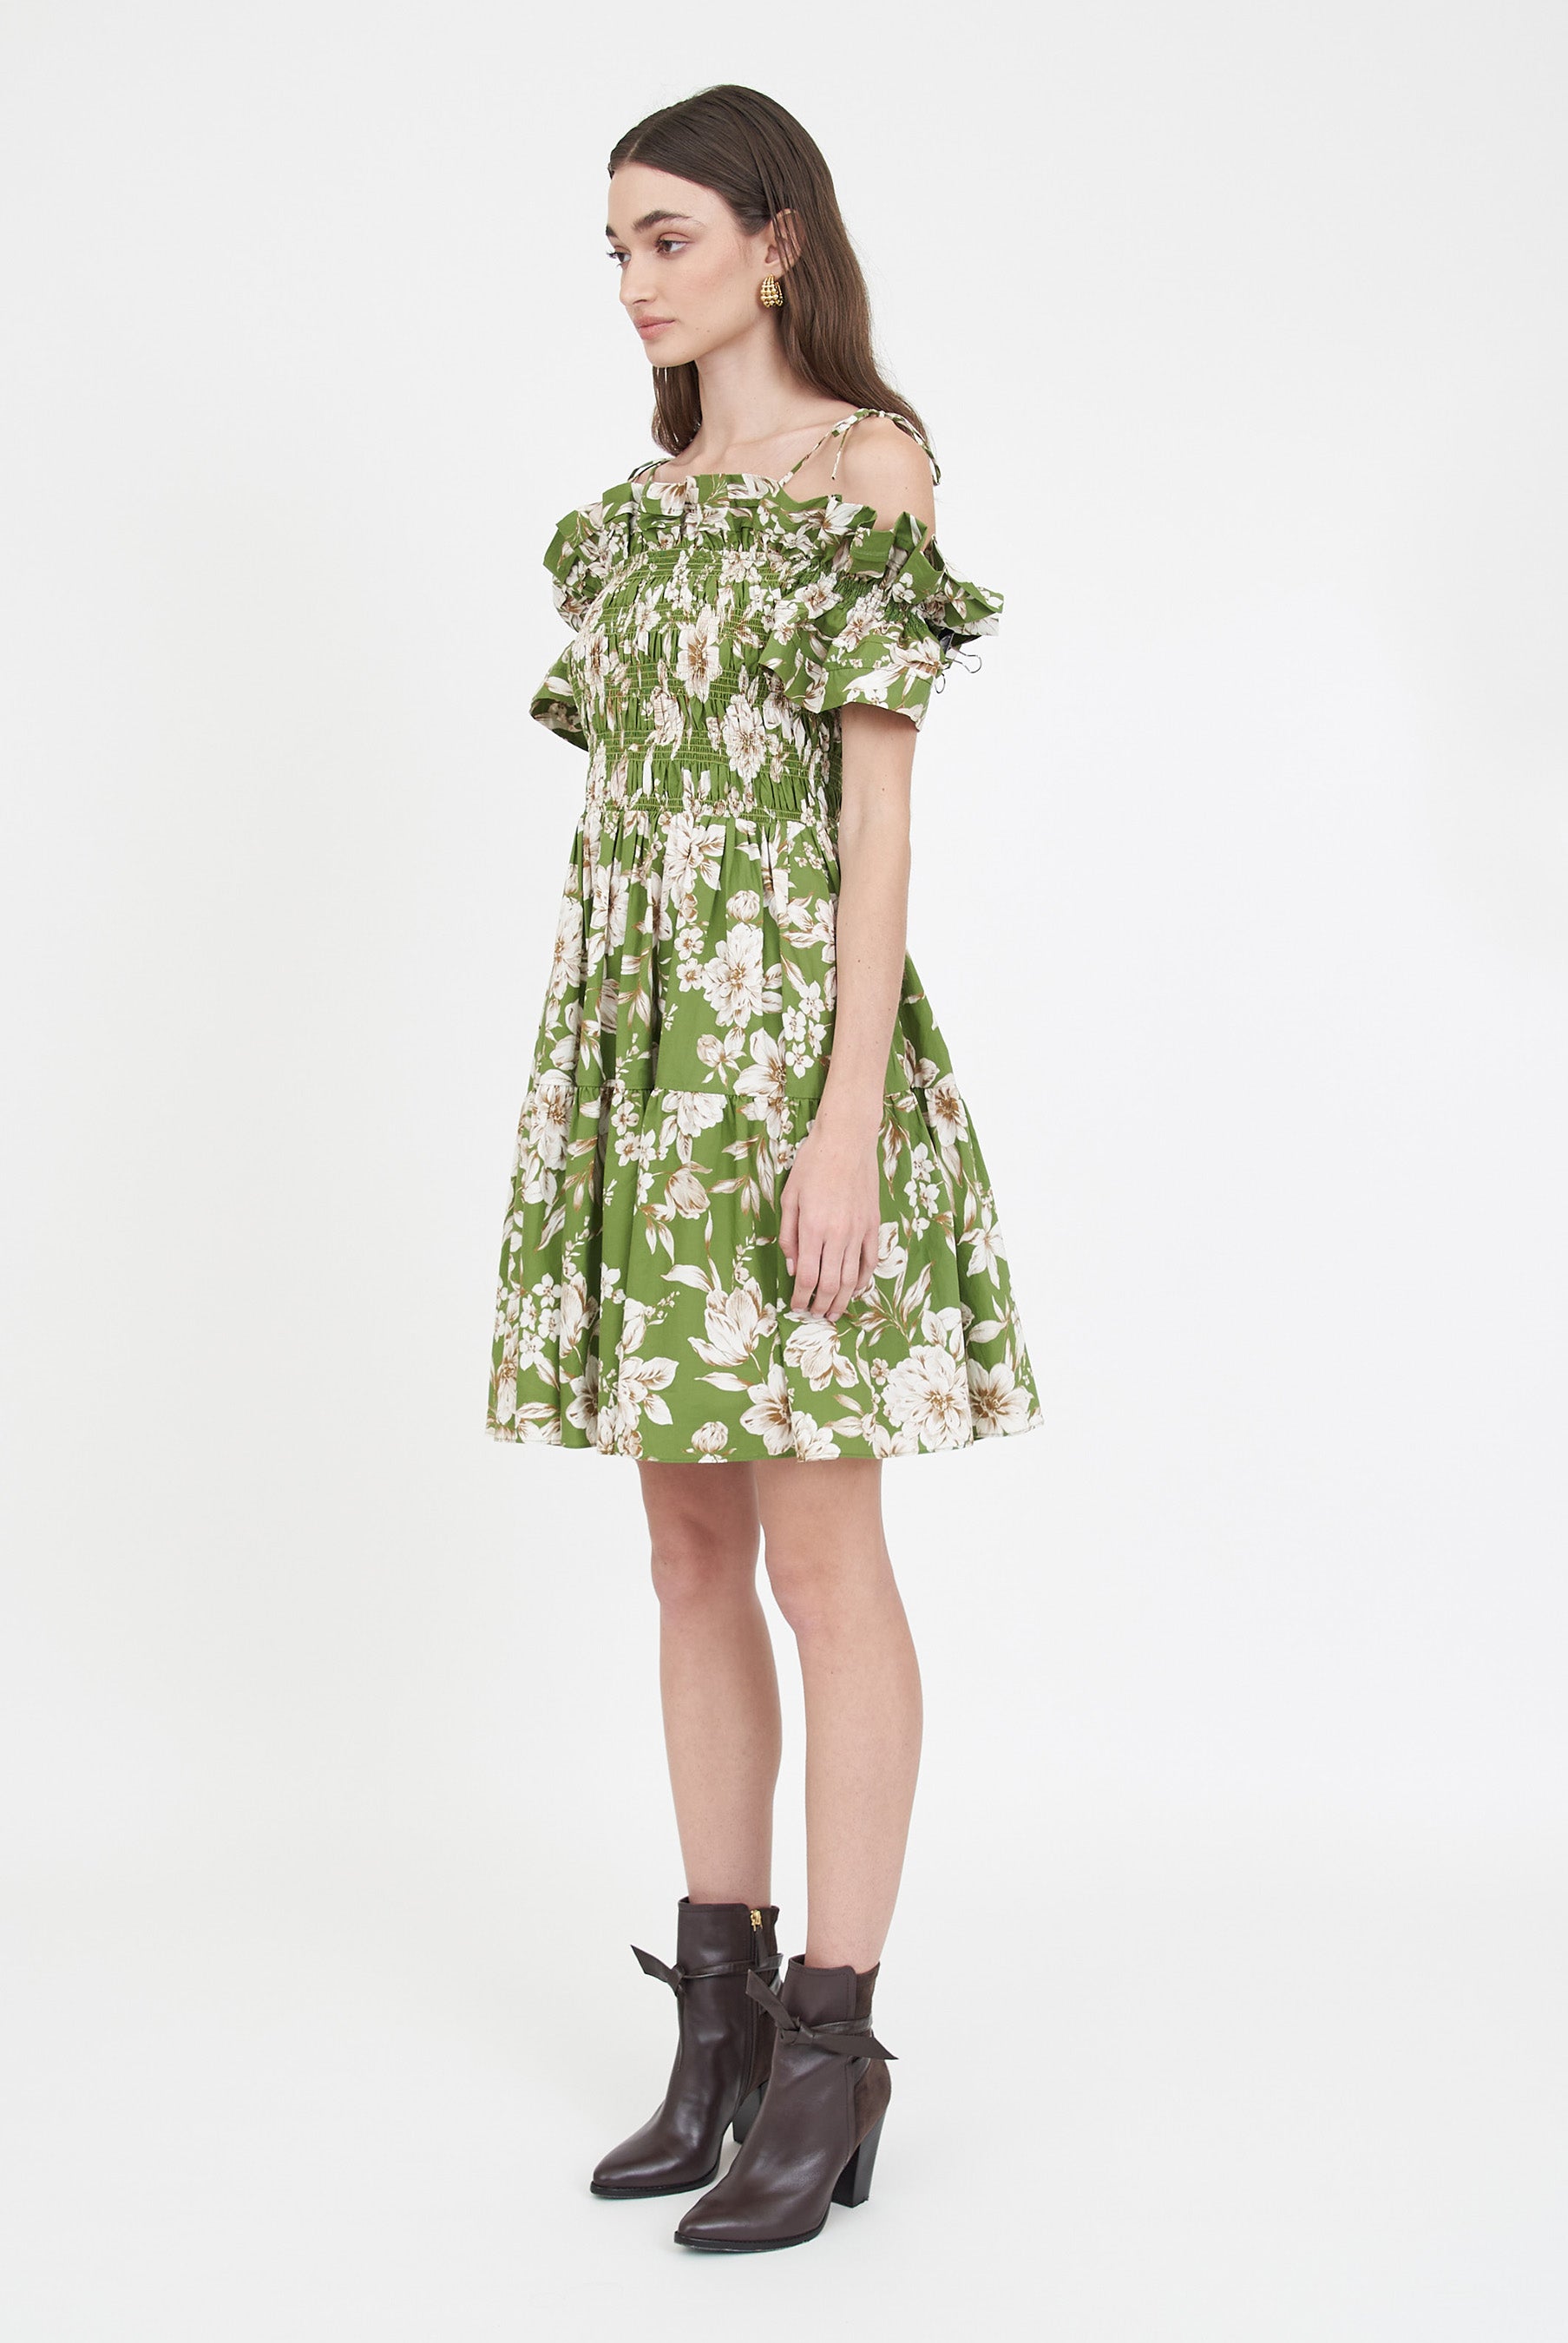 Carlotta Dress - Green Magnolia